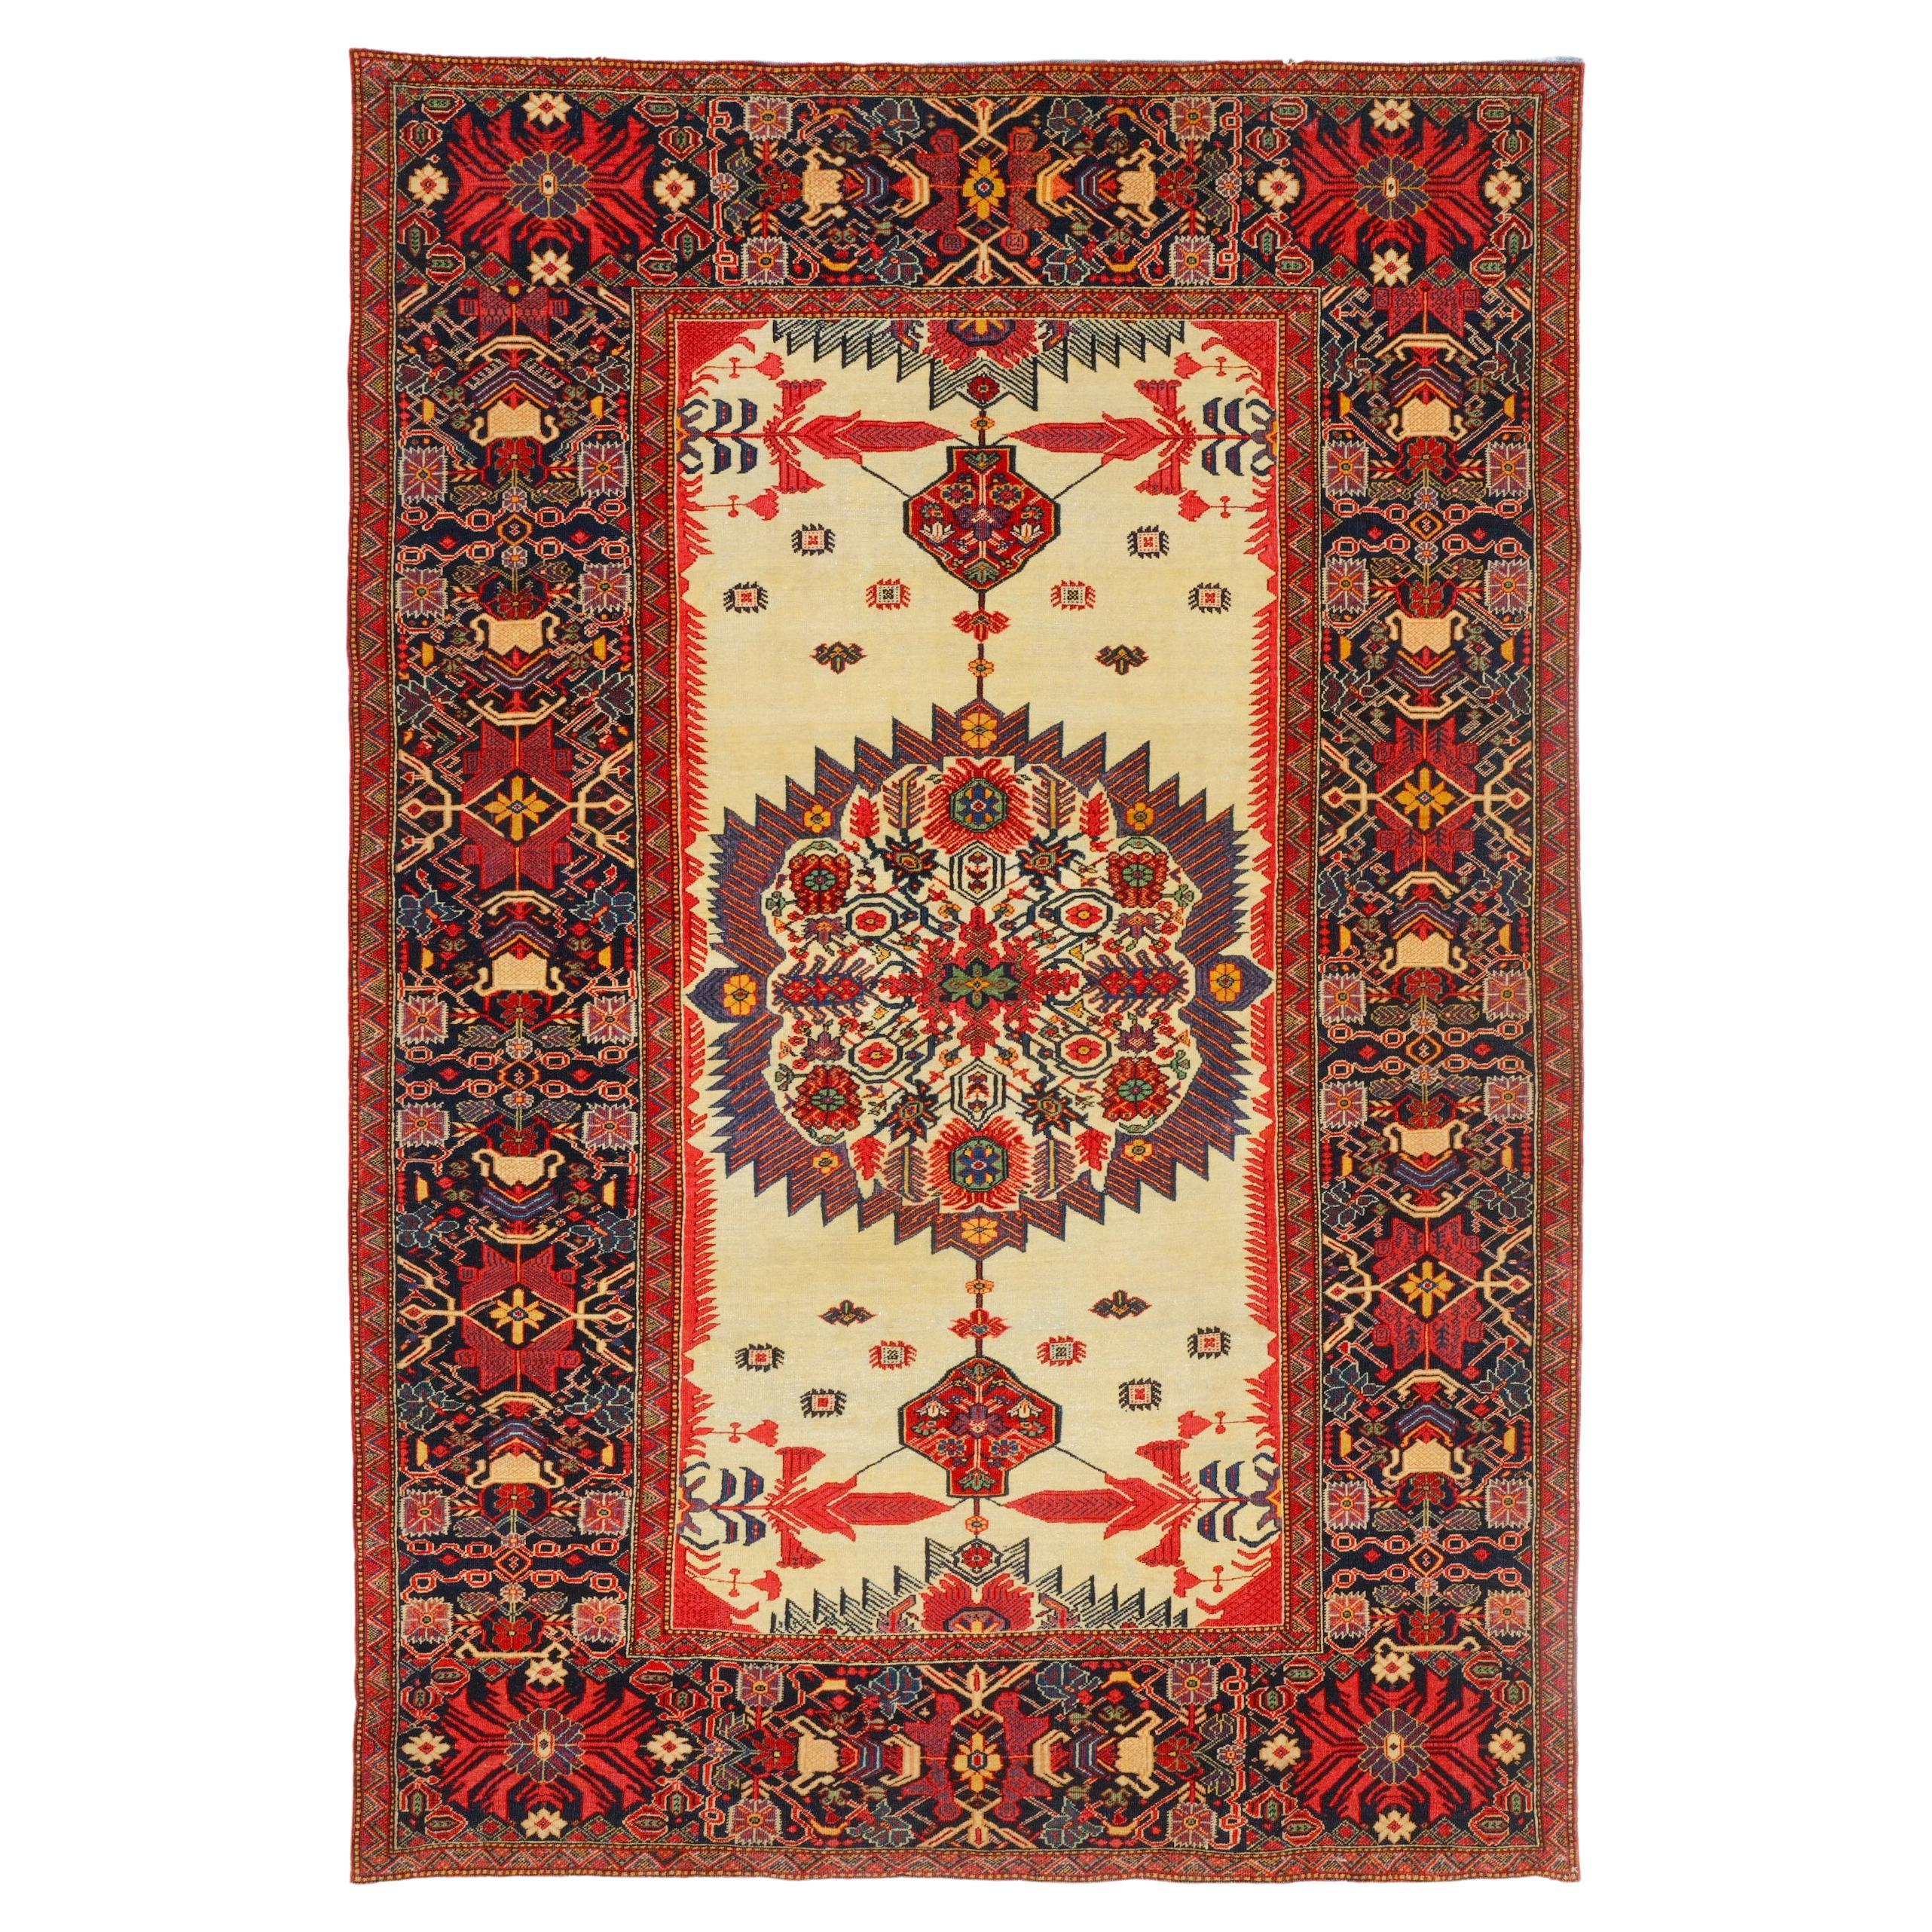 Antique Farahan Sarouk Carpet - Late of 19th Century Sarouk Rug